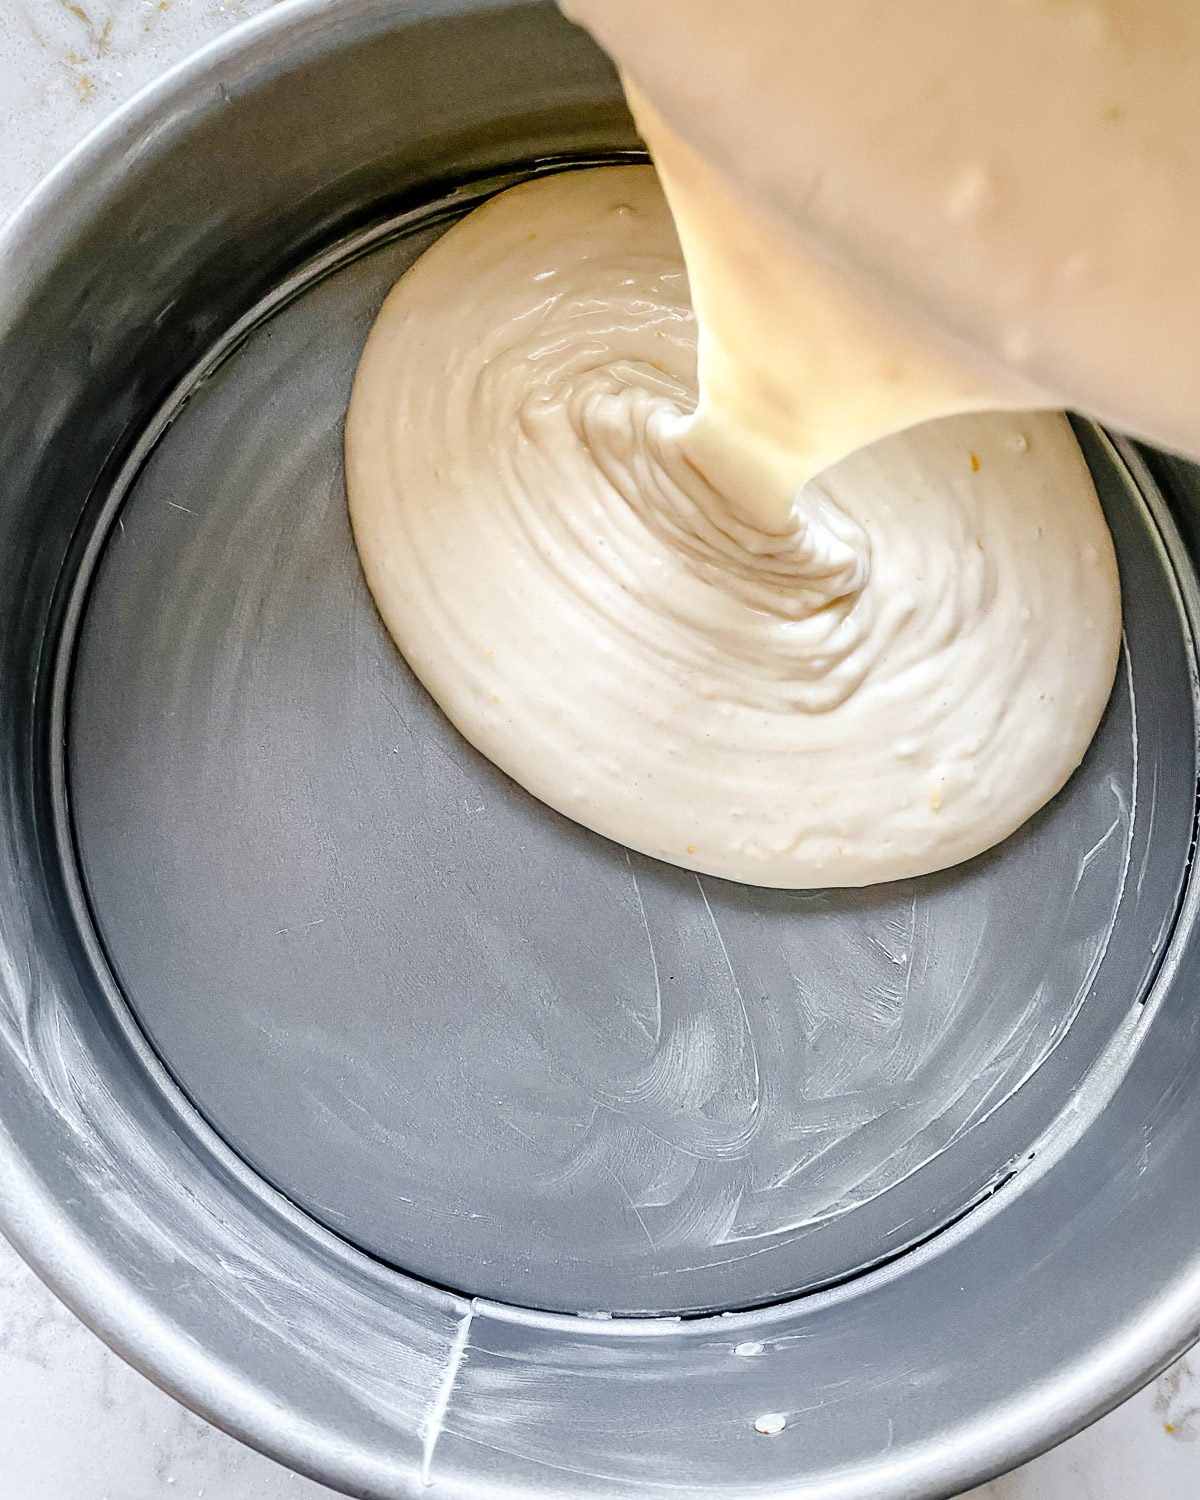 process of pouring Lemon Frosting Cake batter into baking pan